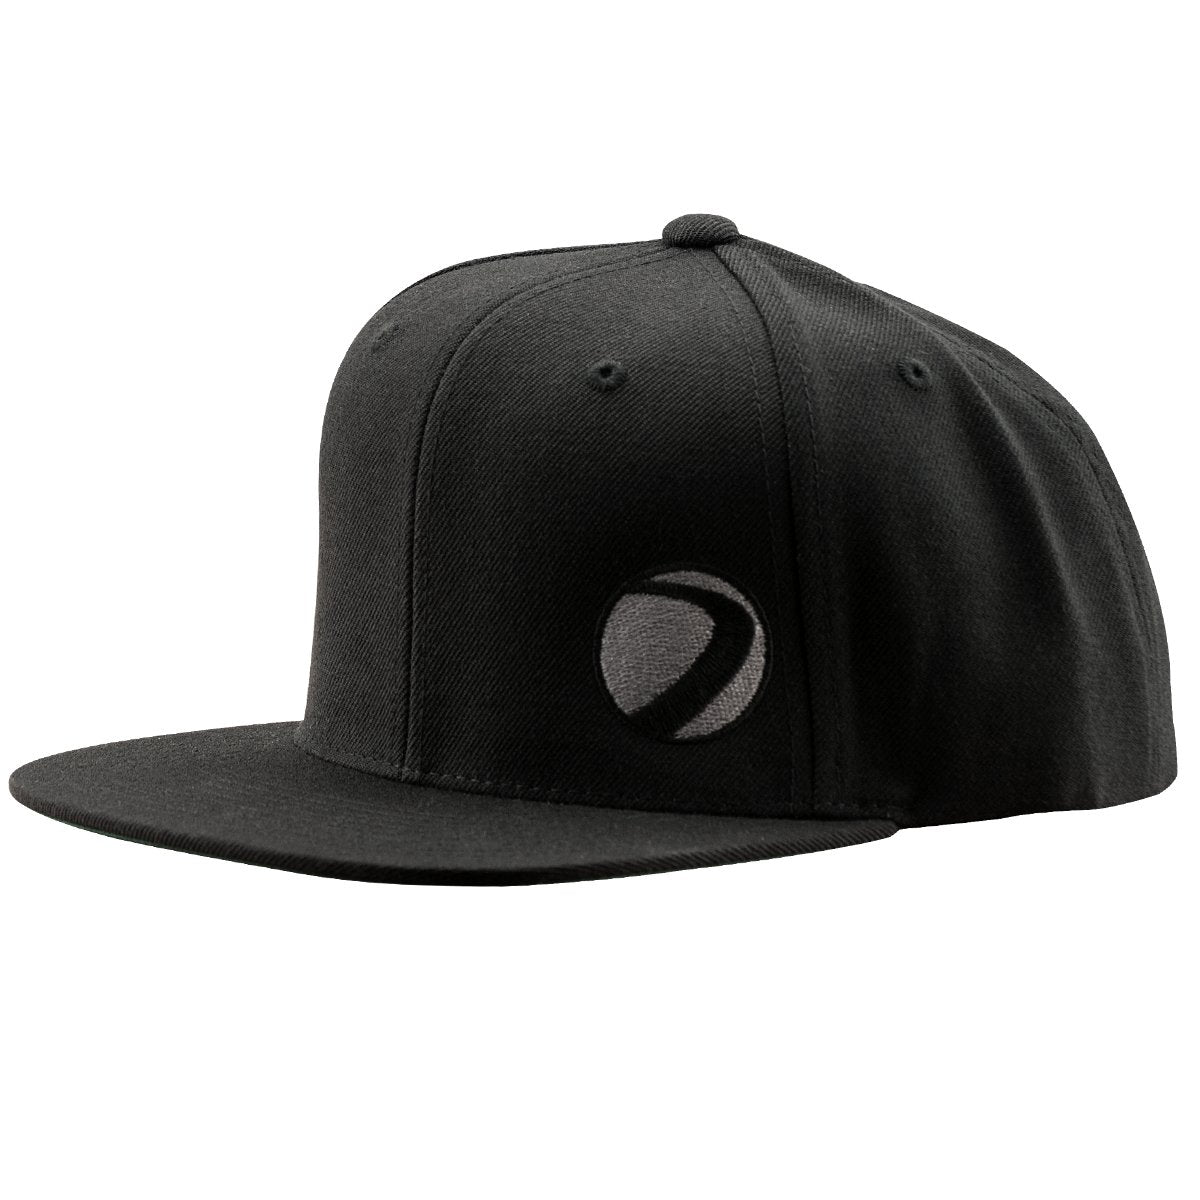 Iconic Snapback Hat